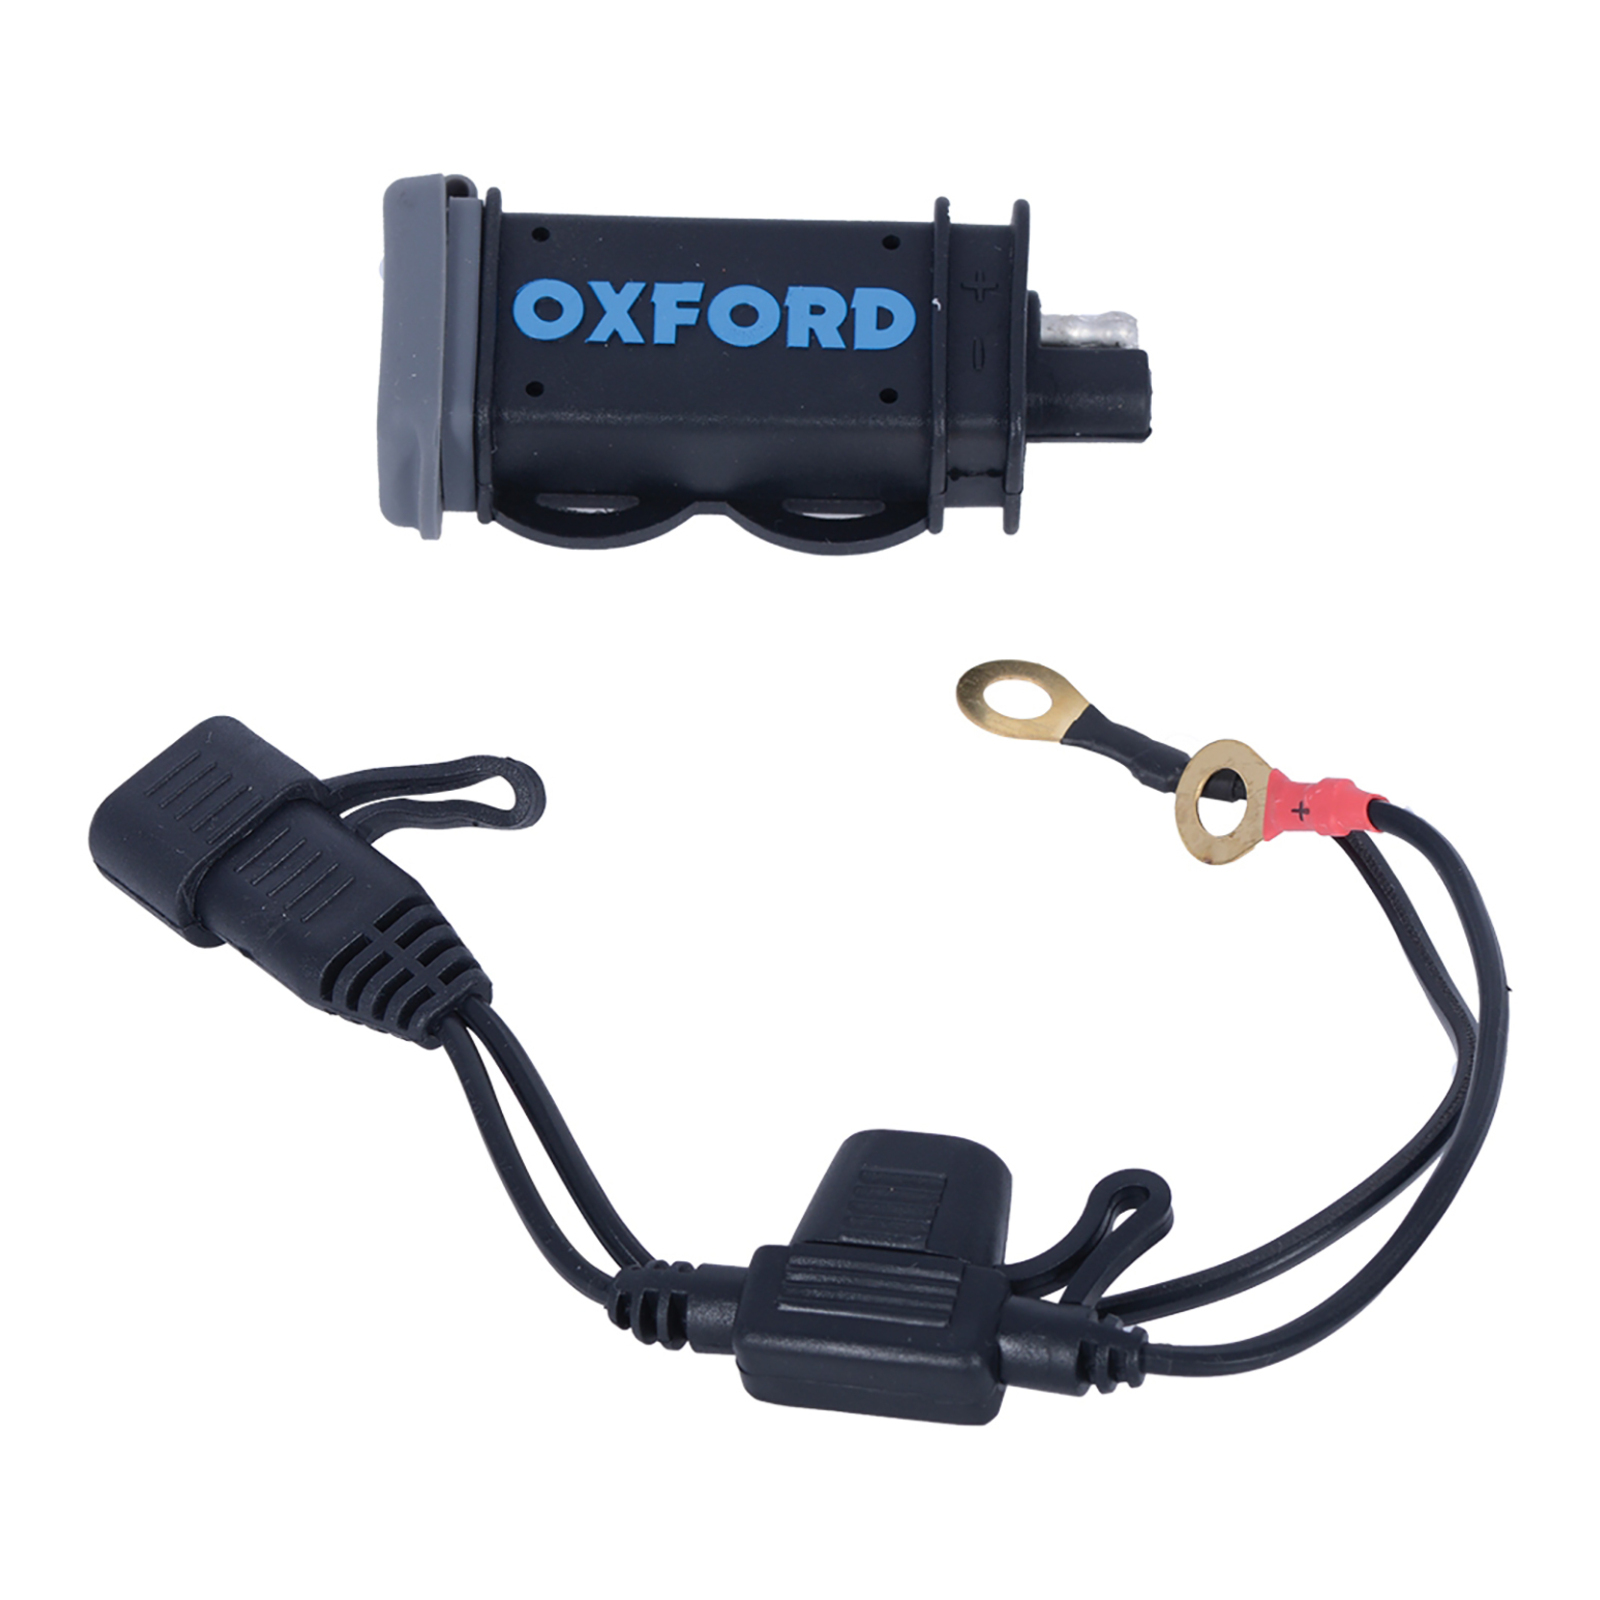 OXFORD USB 2.1AMP HIGH POWER CHARGING KIT